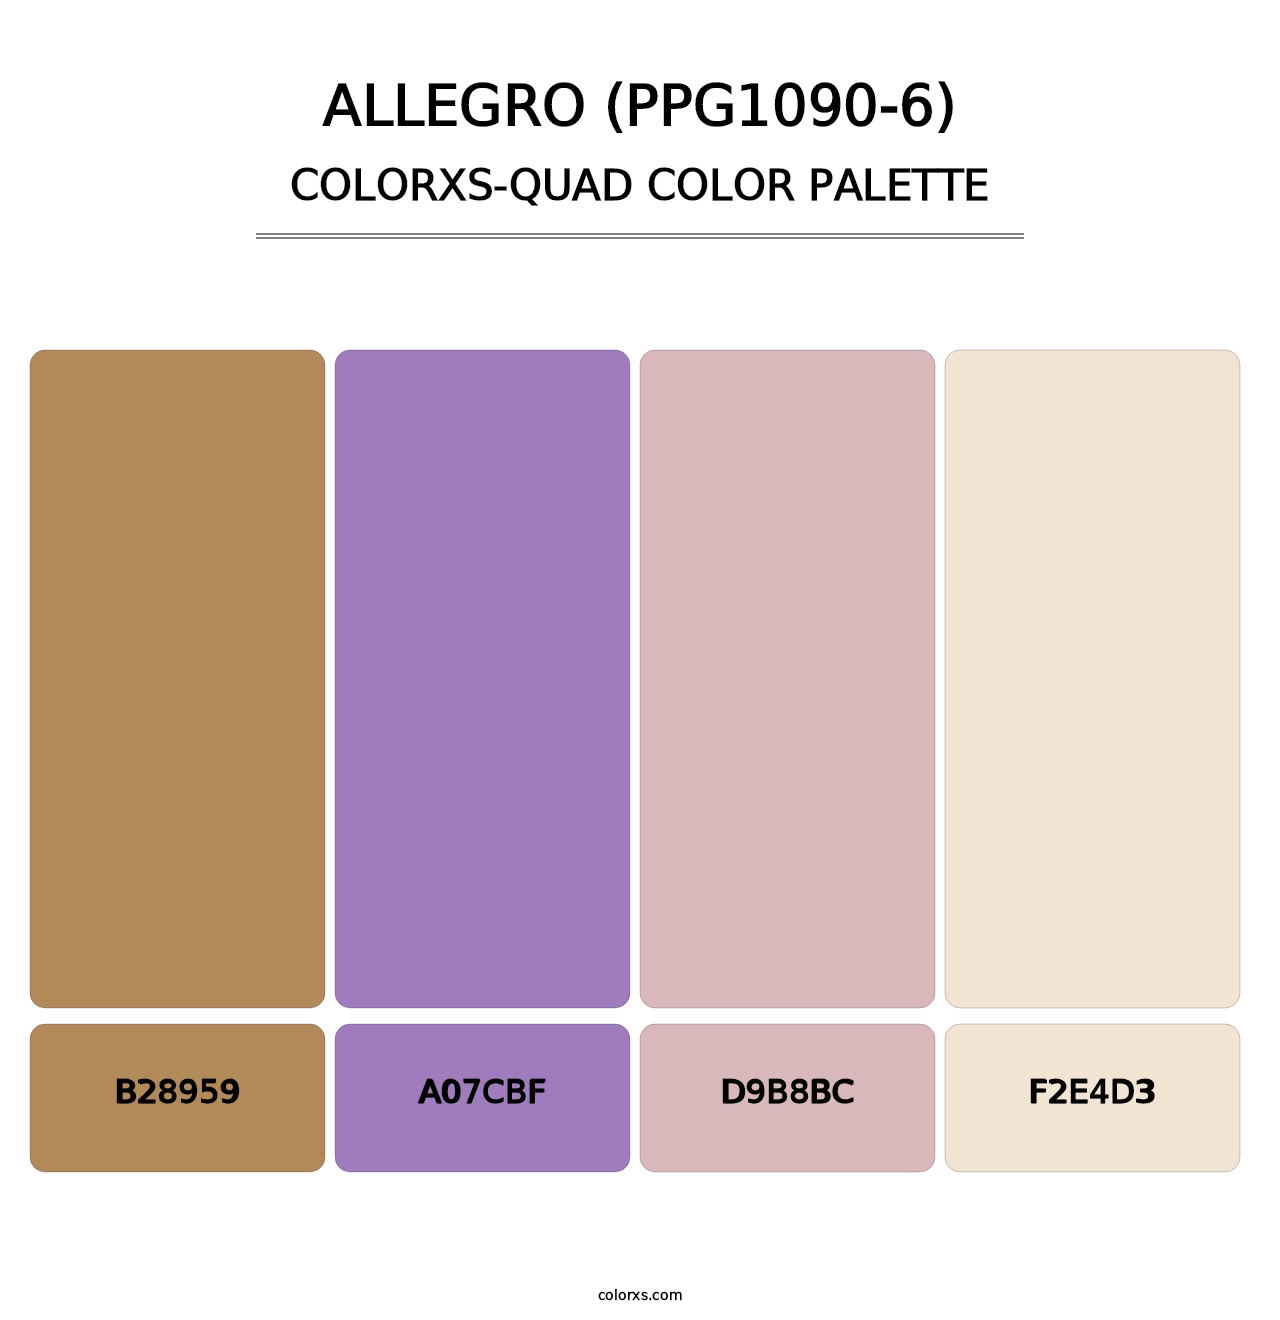 Allegro (PPG1090-6) - Colorxs Quad Palette